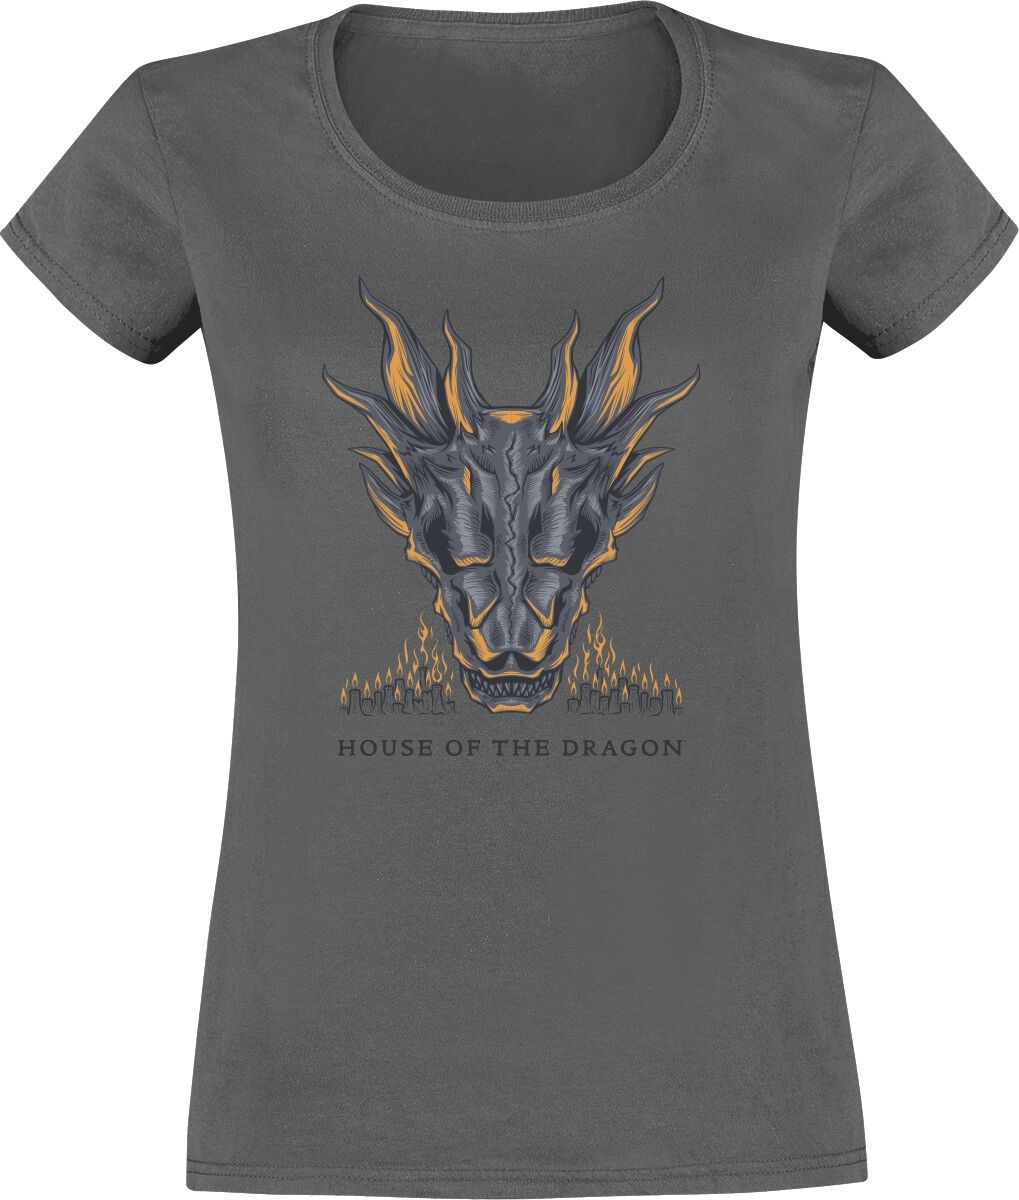 T-Shirt Manches courtes de Game Of Thrones - House Of The Dragon - Illuminated - S à L - pour Femme 